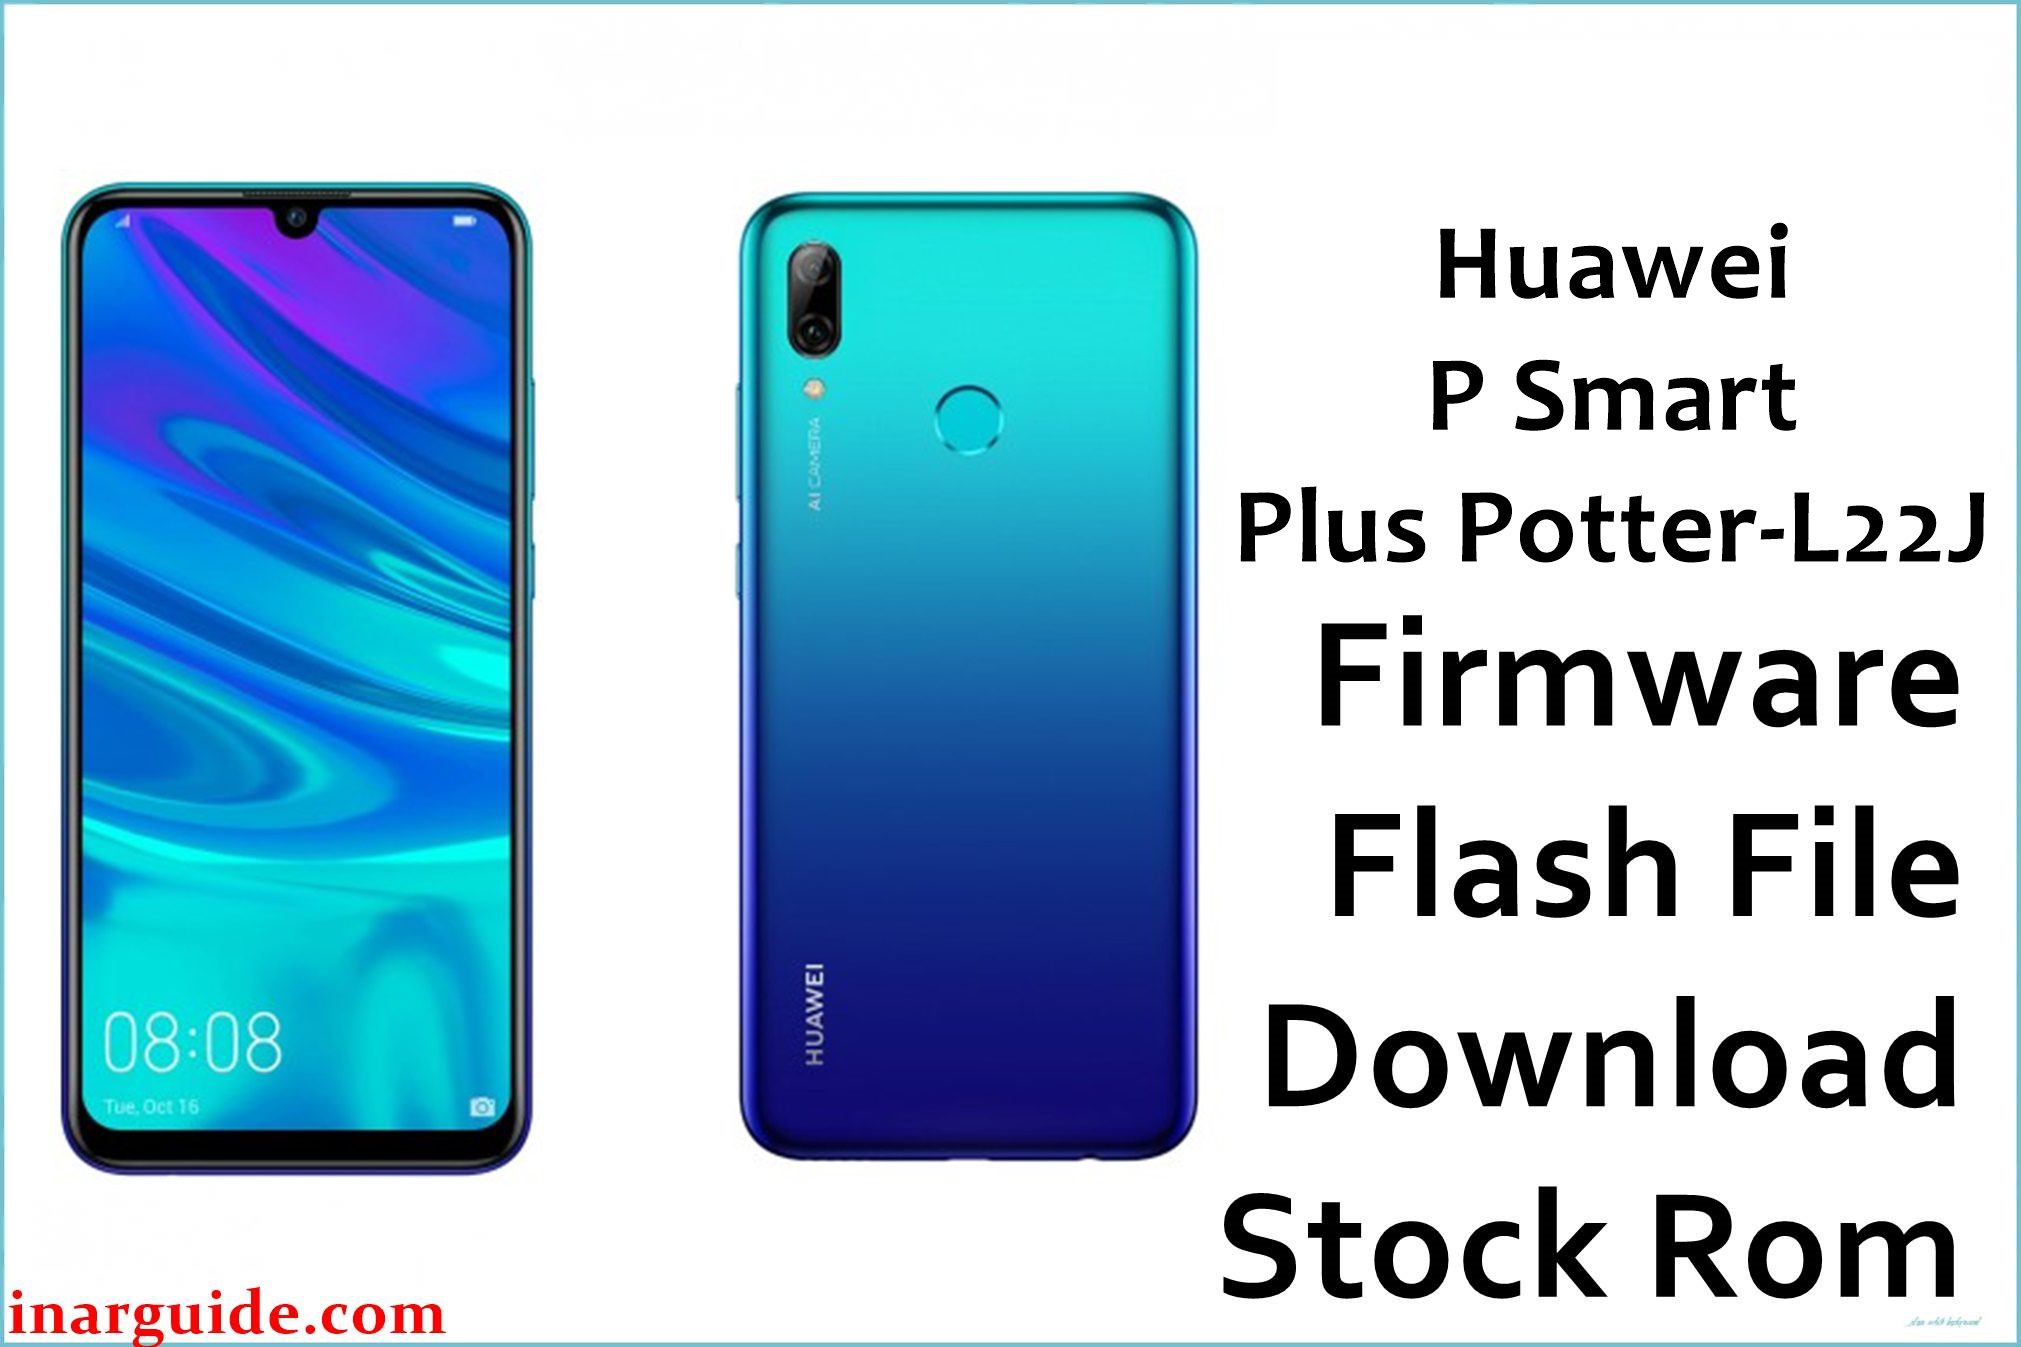 Huawei P Smart Plus Potter L22J